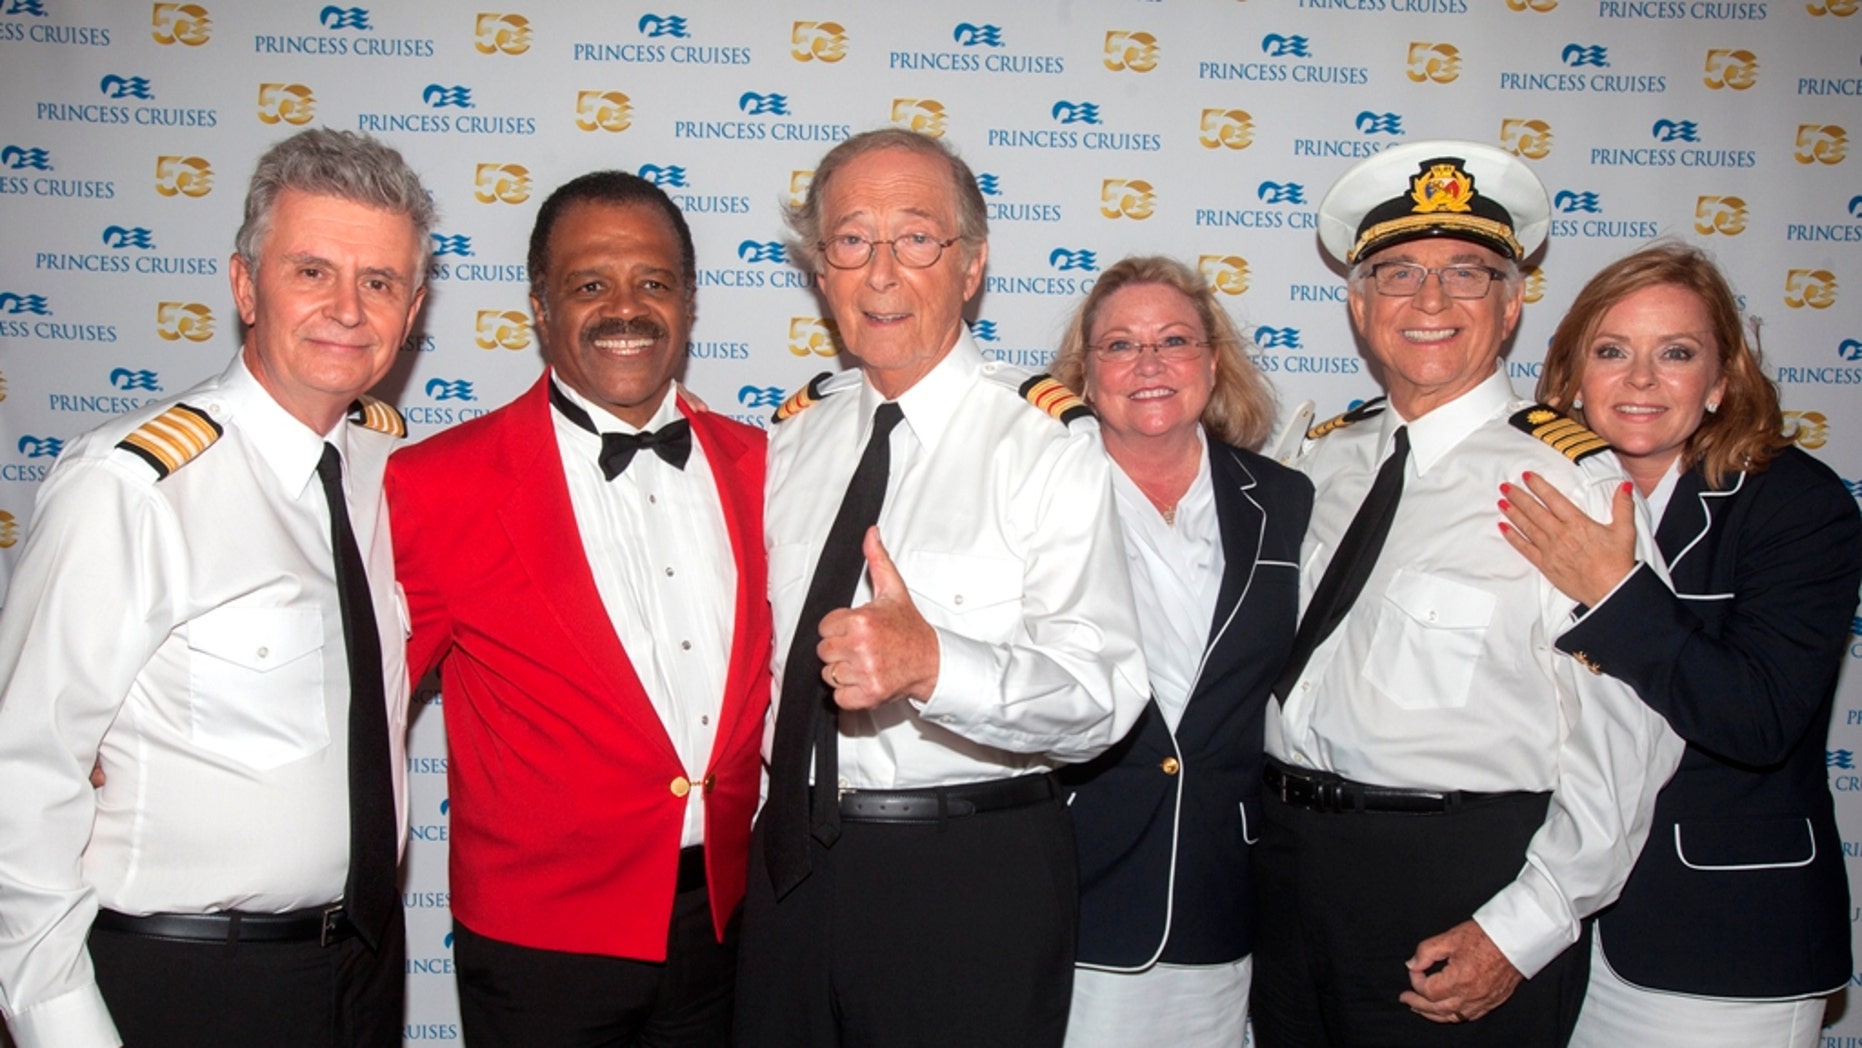 ‘Love Boat’ cast helps kick off Princess Cruises’ 50th anniversary